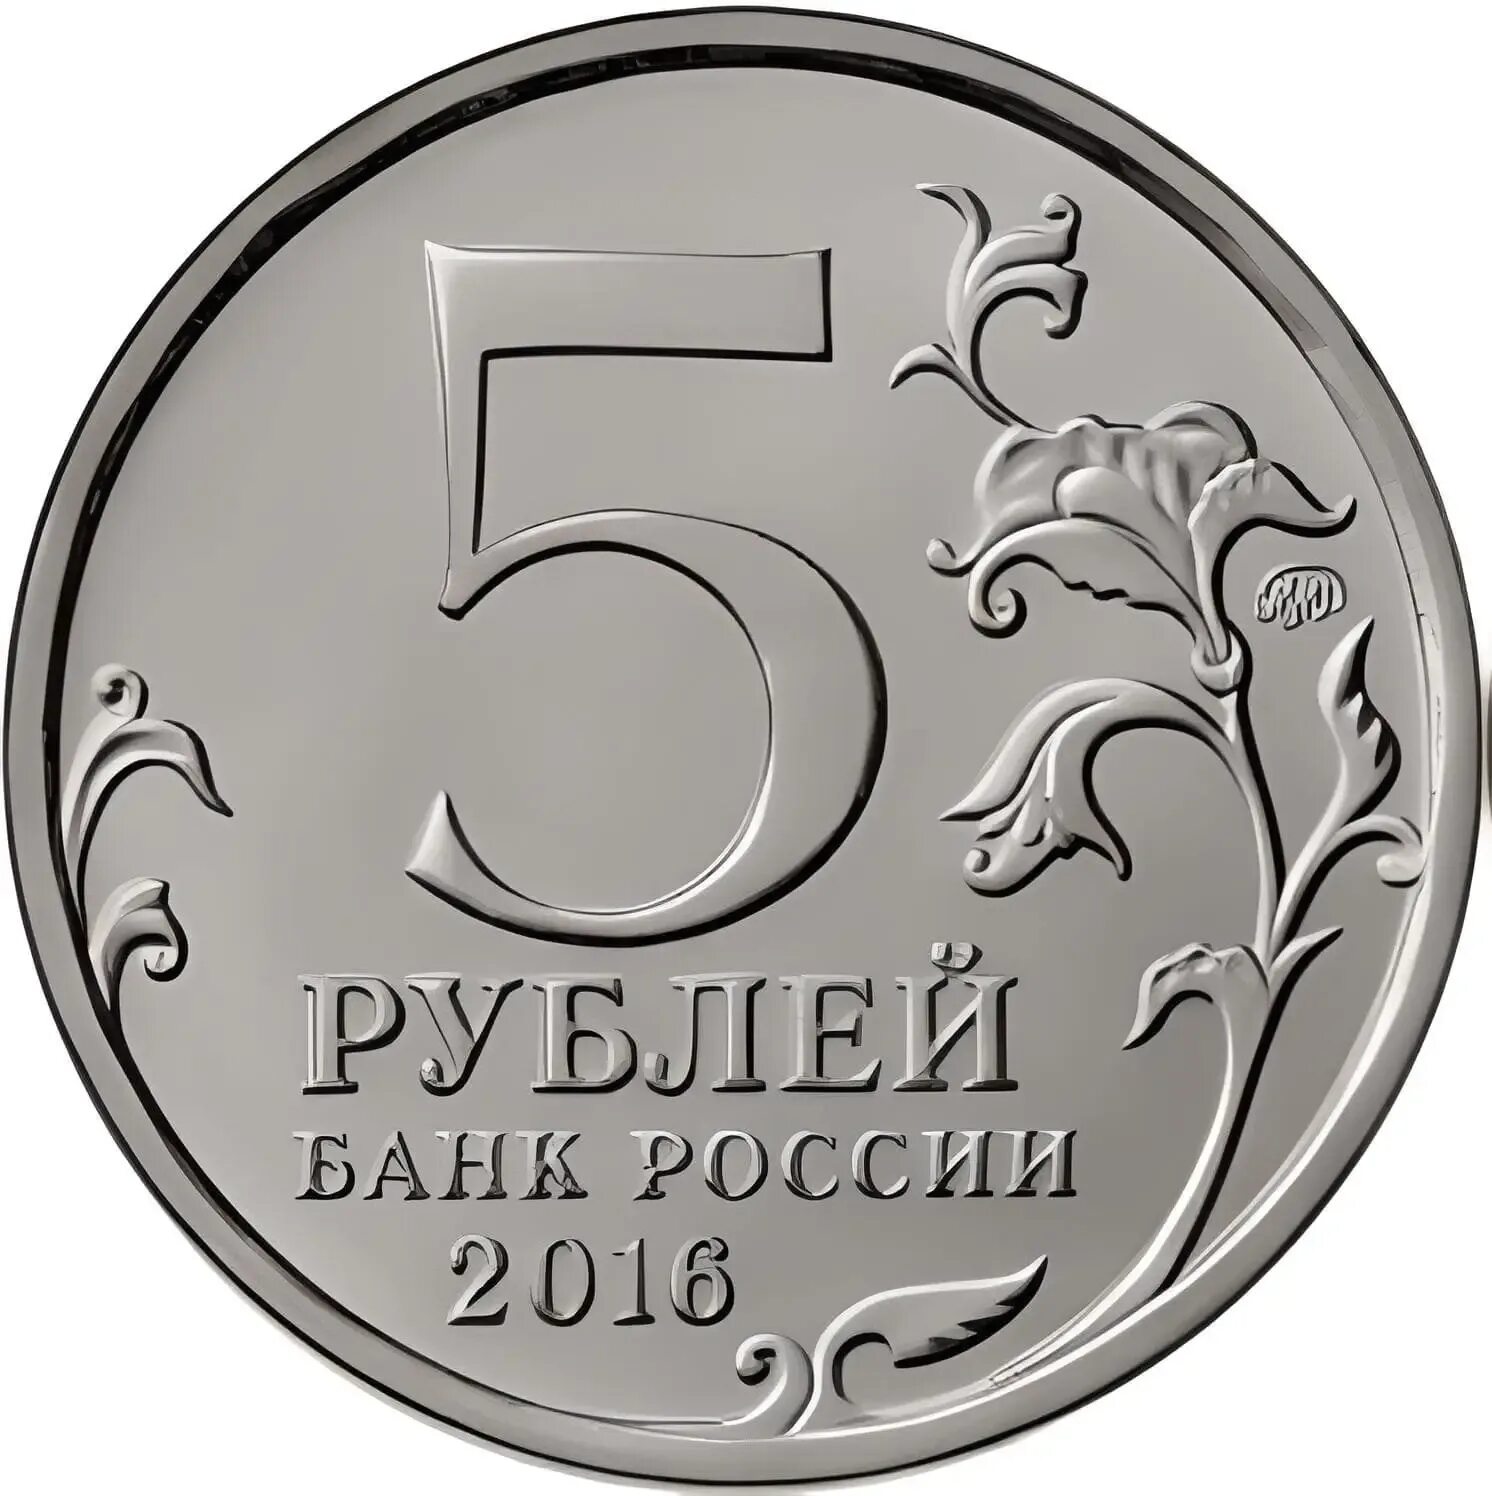 Монета 5 рублей. Изображение 5 рублей. Монета 2 рубля на прозрачном фоне. Монета 5 руб для фотошопа.